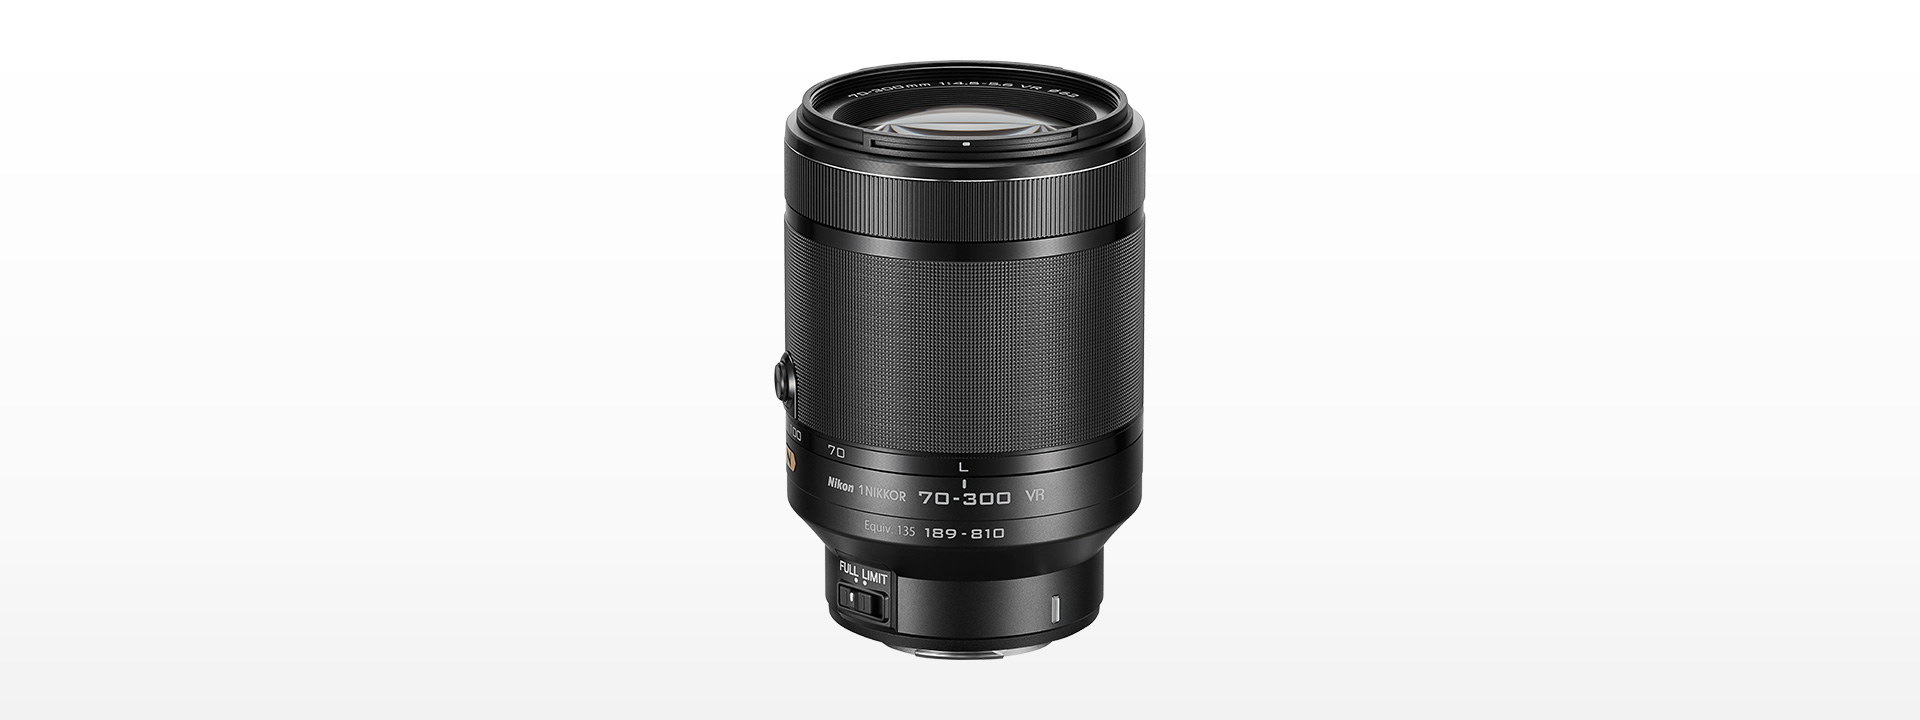 Nikon 1 NIKKOR VR 70-300mm 超望遠ズームレンズ-